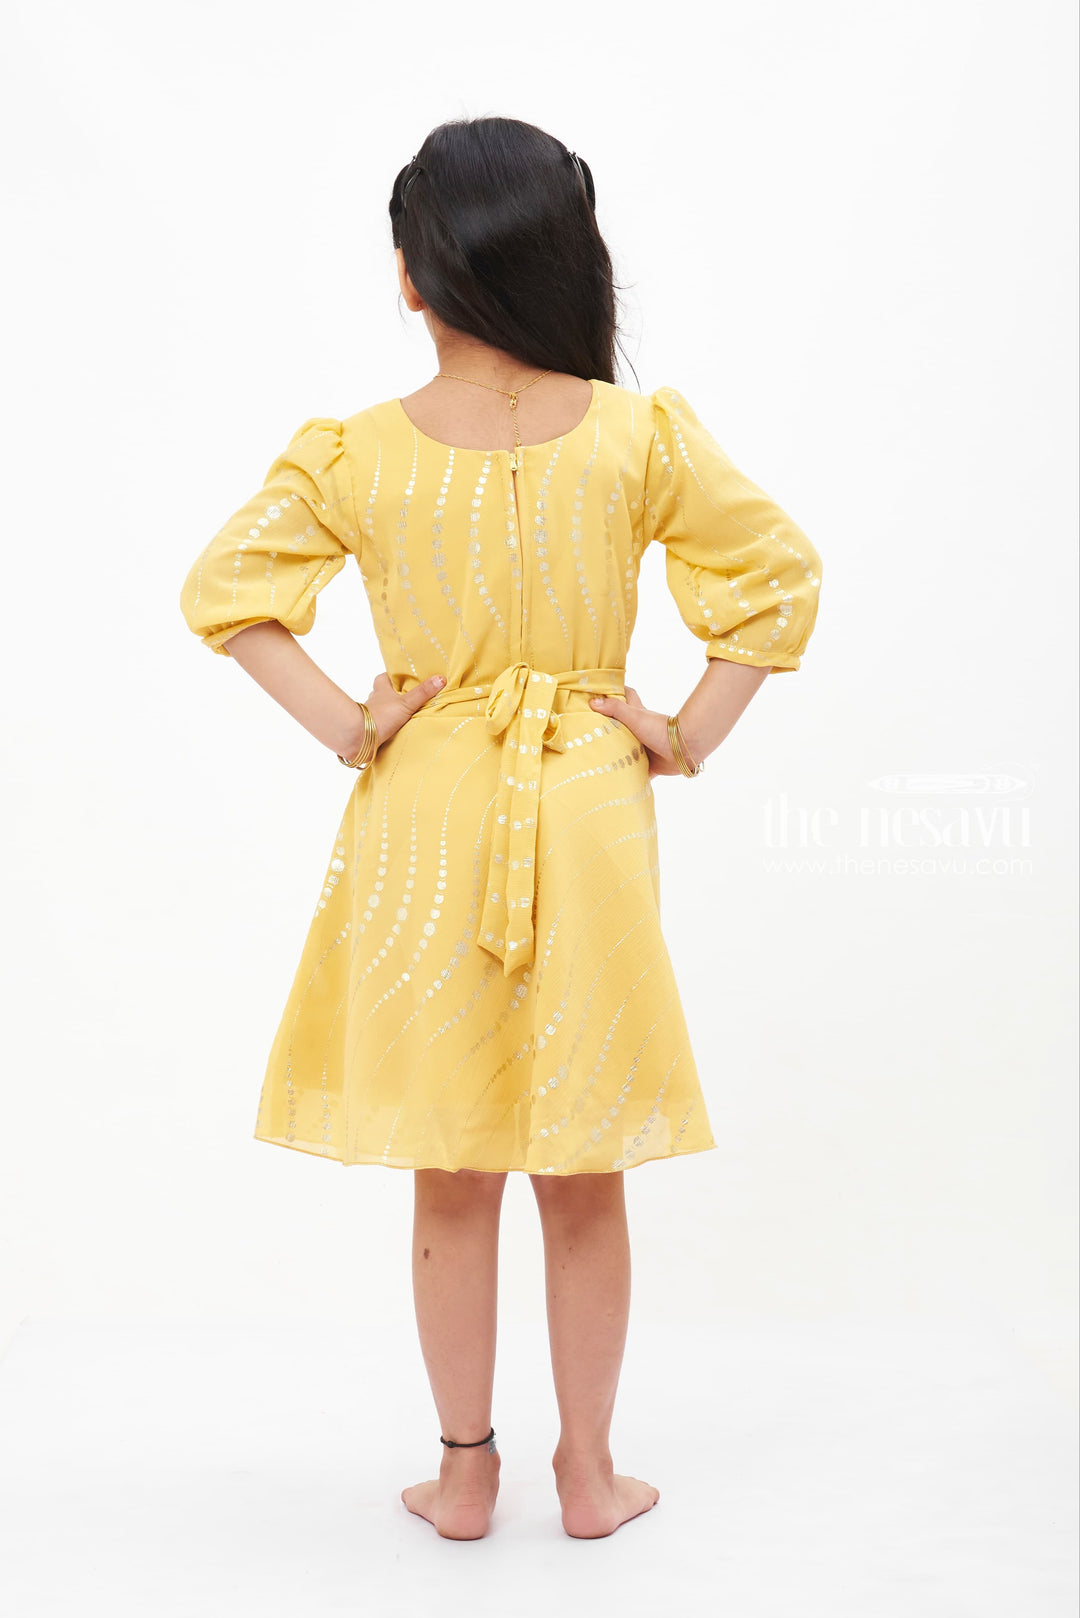 The Nesavu Girls Fancy Frock Sunbeam Sequin Dance Dress: Radiant Yellow with Dazzling Accents for Girls Nesavu Girls' Yellow Sequin Party Dress | Long Sleeve Sparkle Dress | The Nesavu